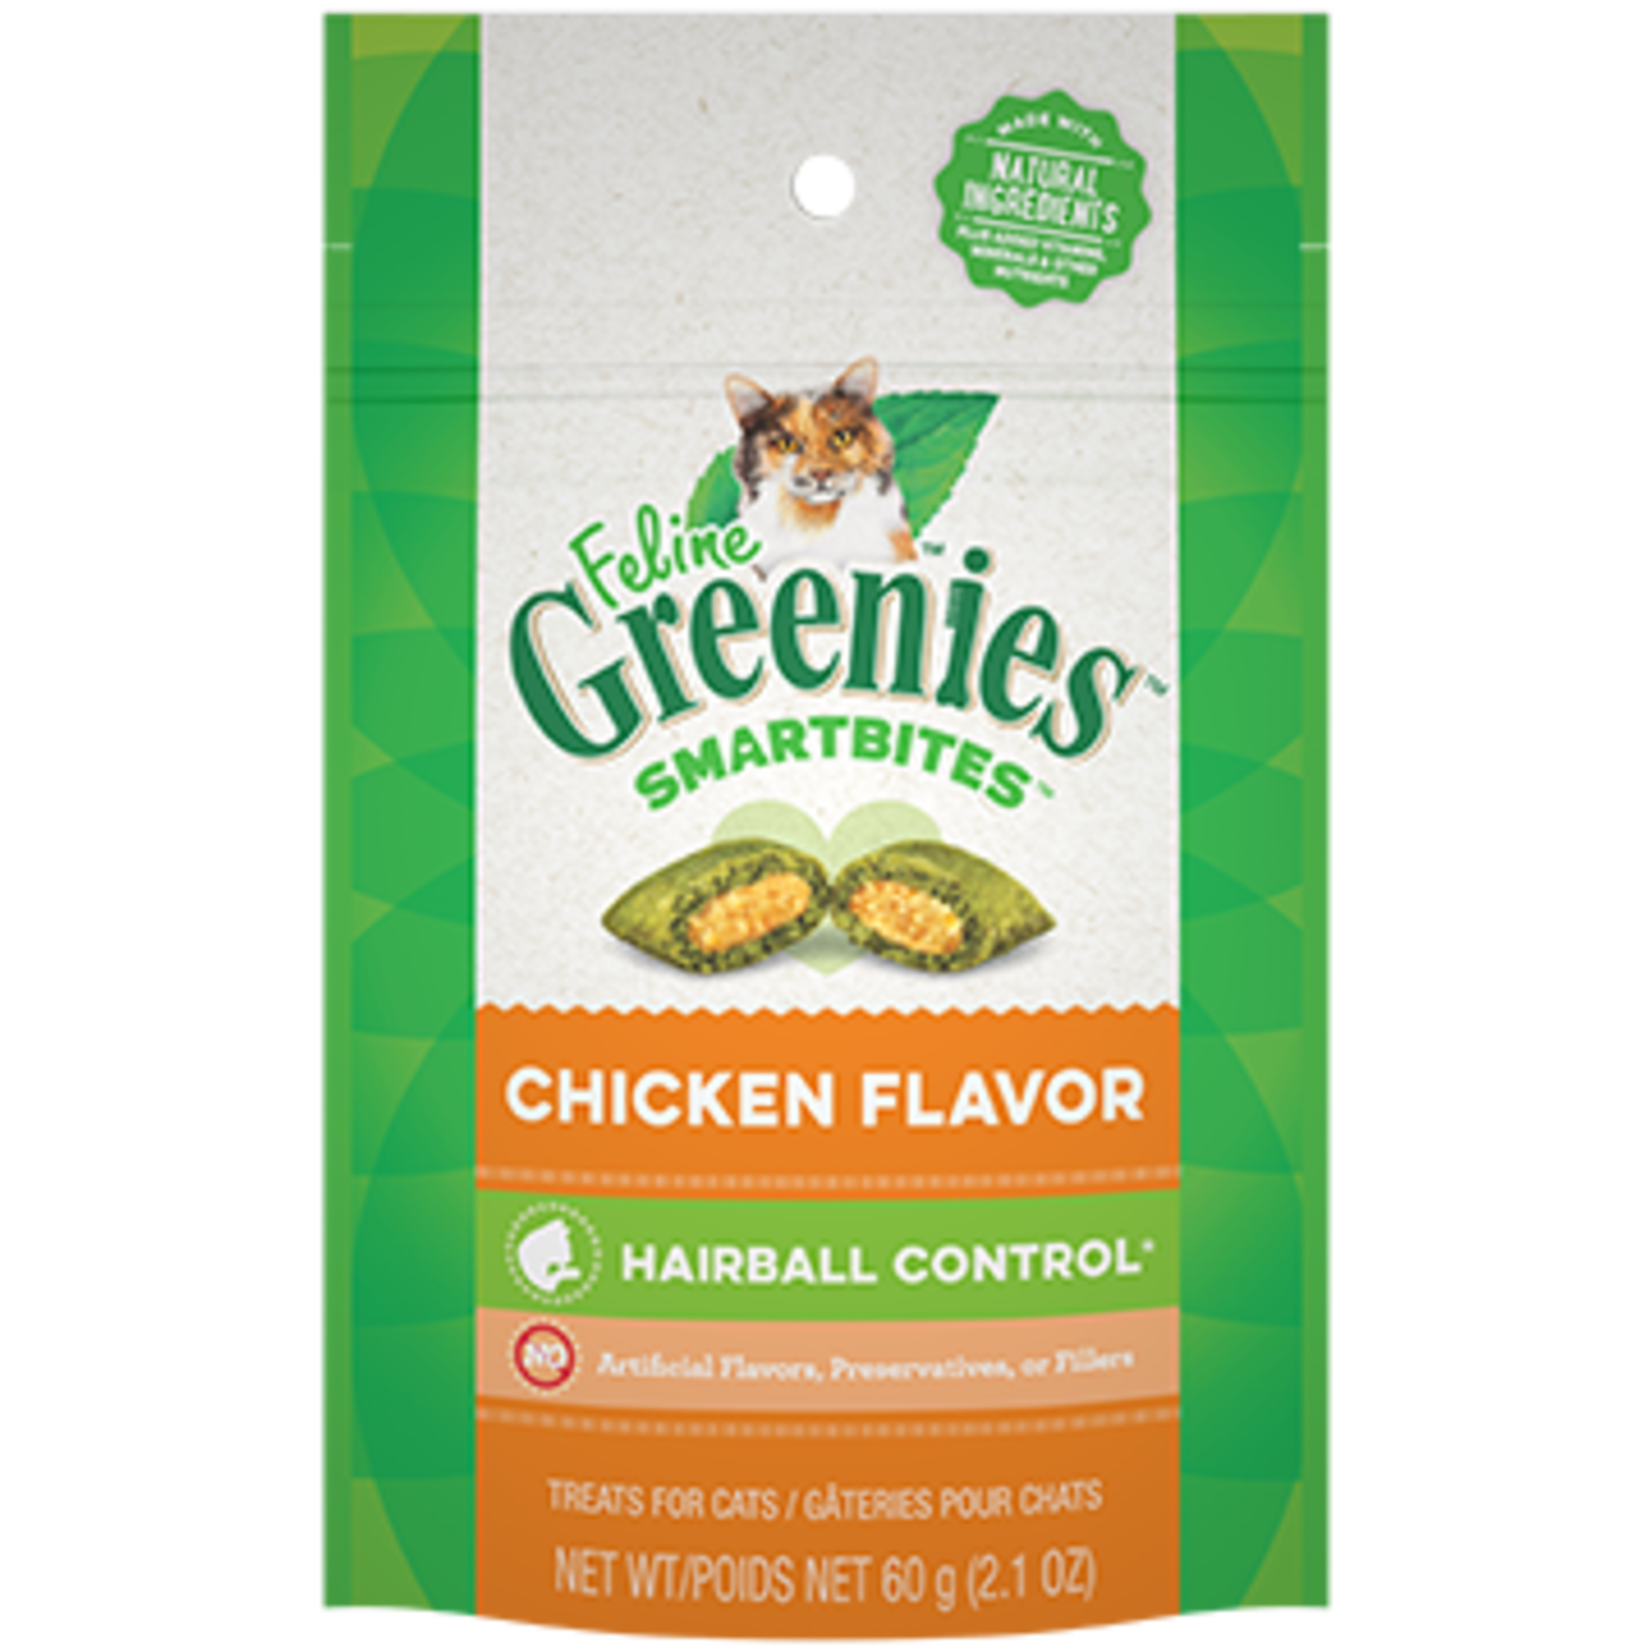 Greenies Feline Greenies Smartbites Cat Treats Hairball Control Chicken Flavor